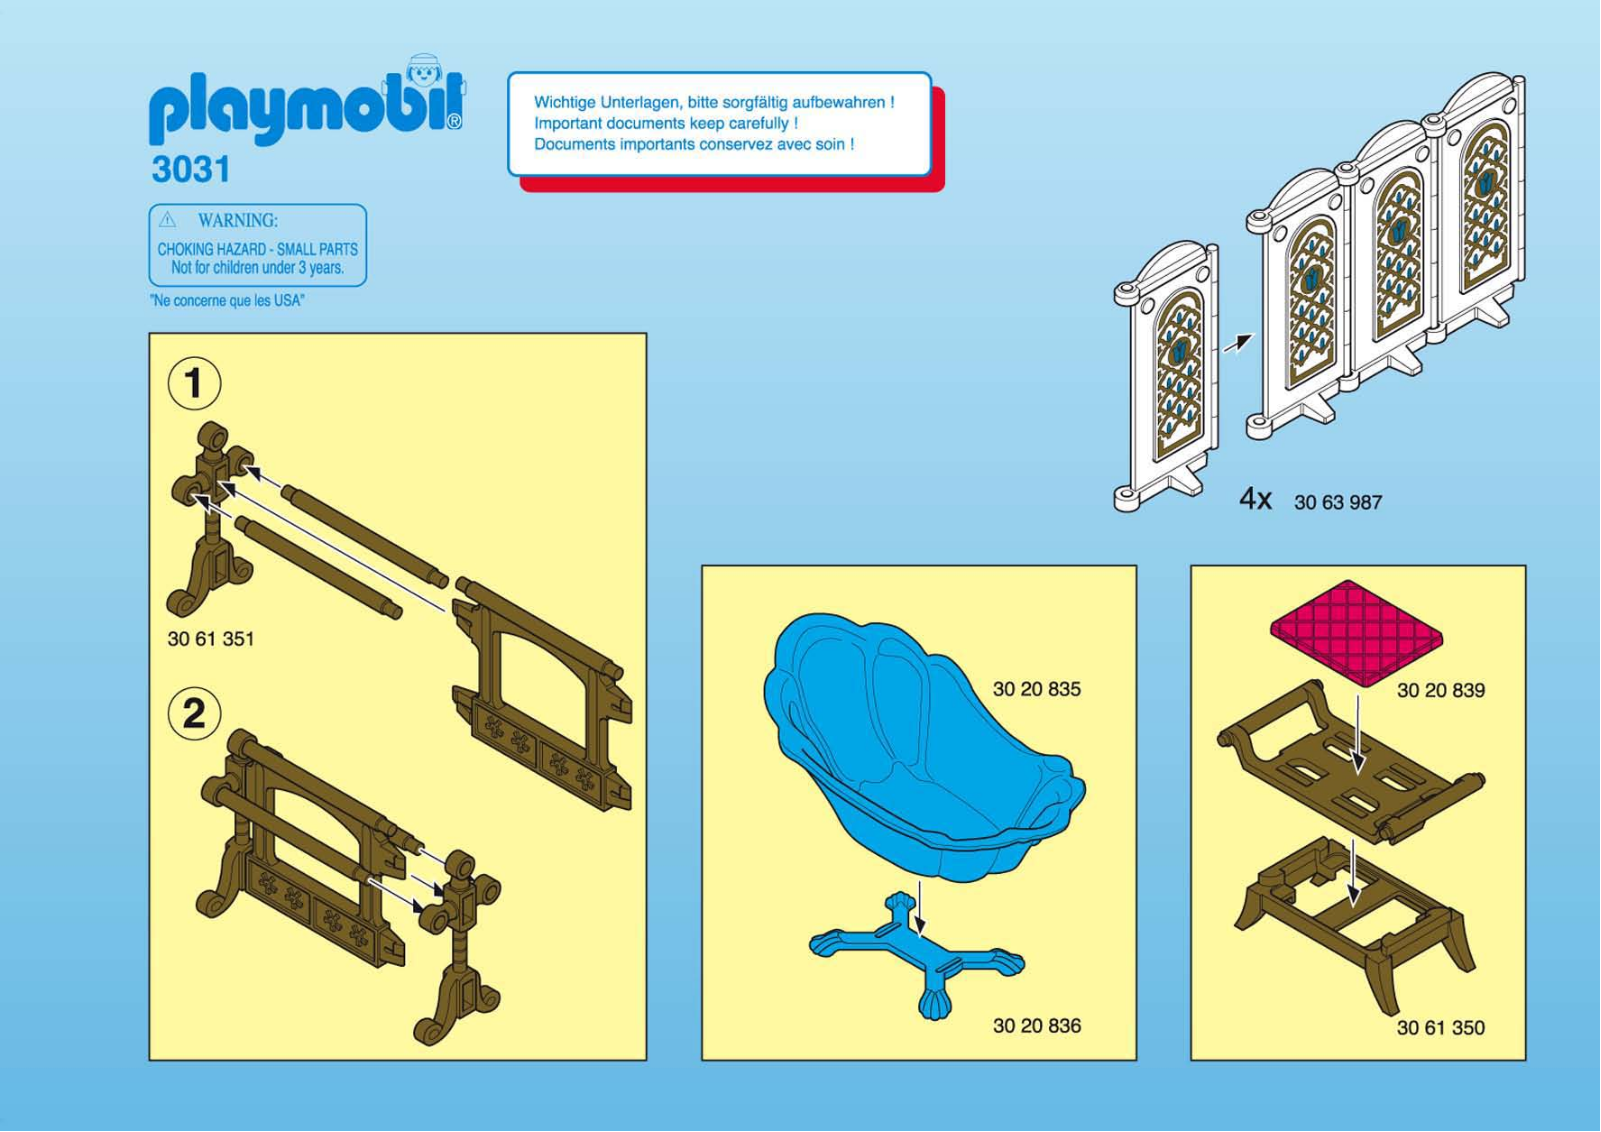 Playmobil 3031 Instructions